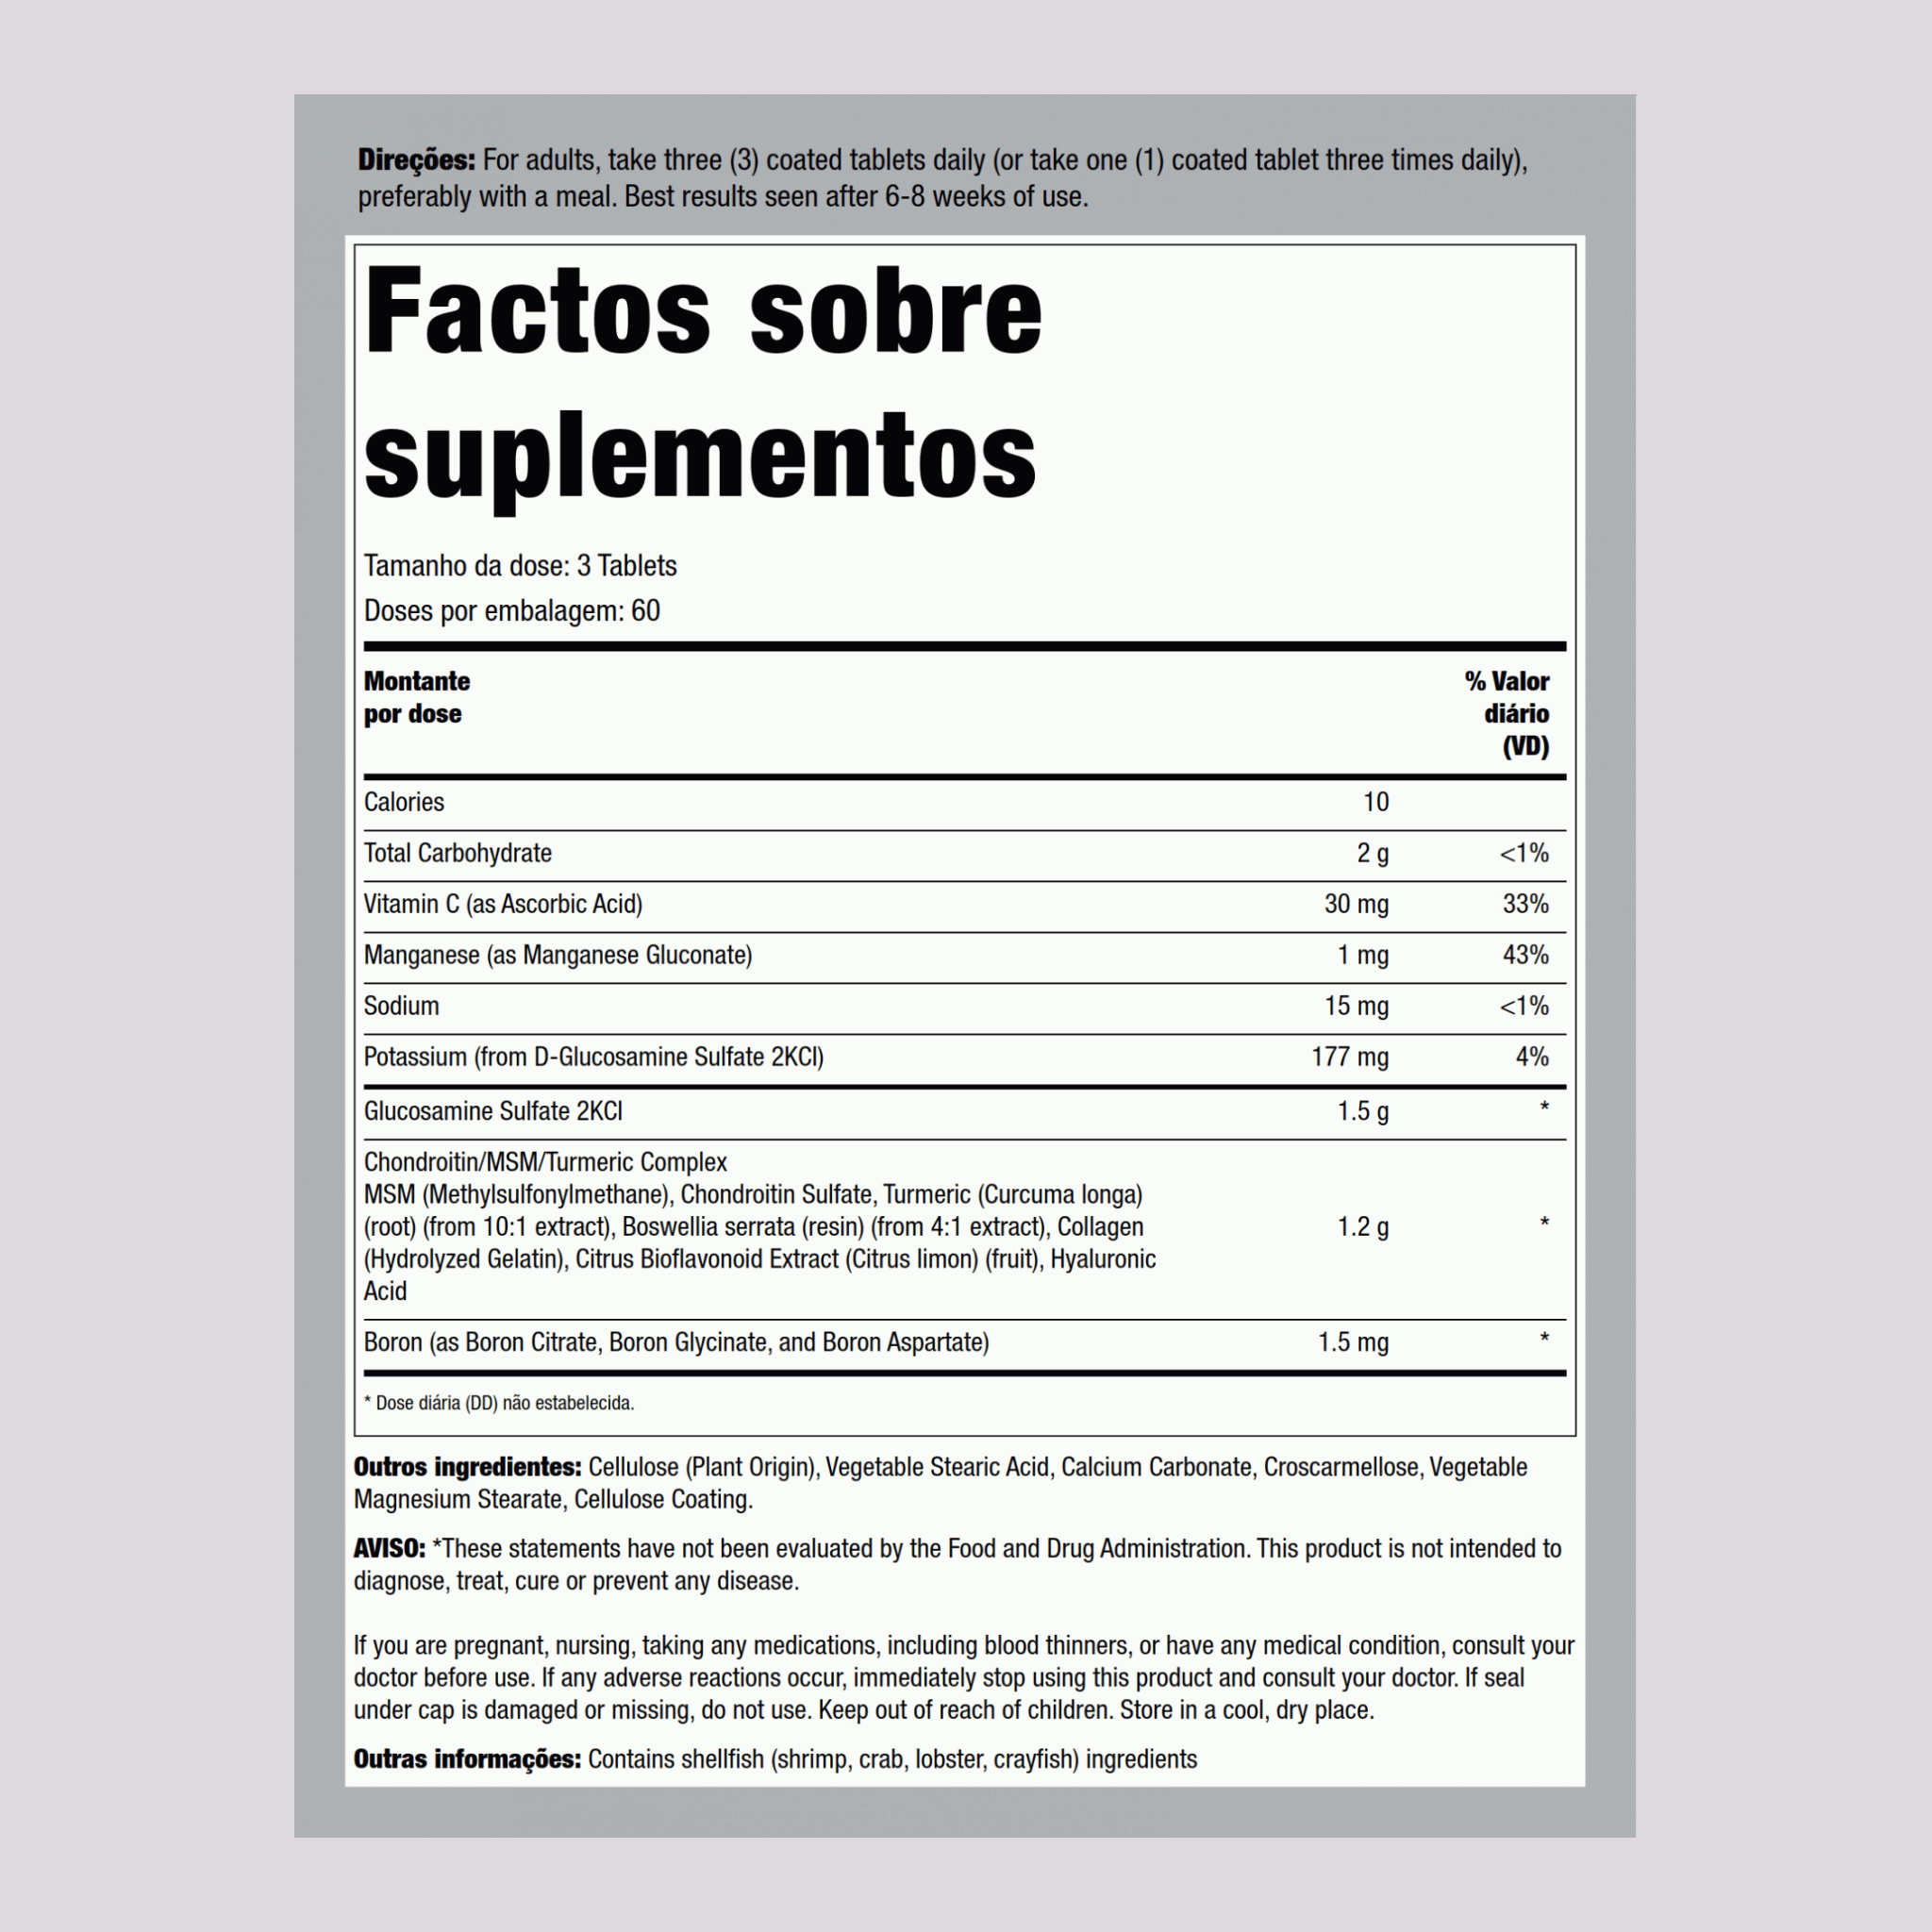 Glucosamine Chondroitin & MSM Plus Turmeric Tabs, 180 Tablets, 2  Bottles